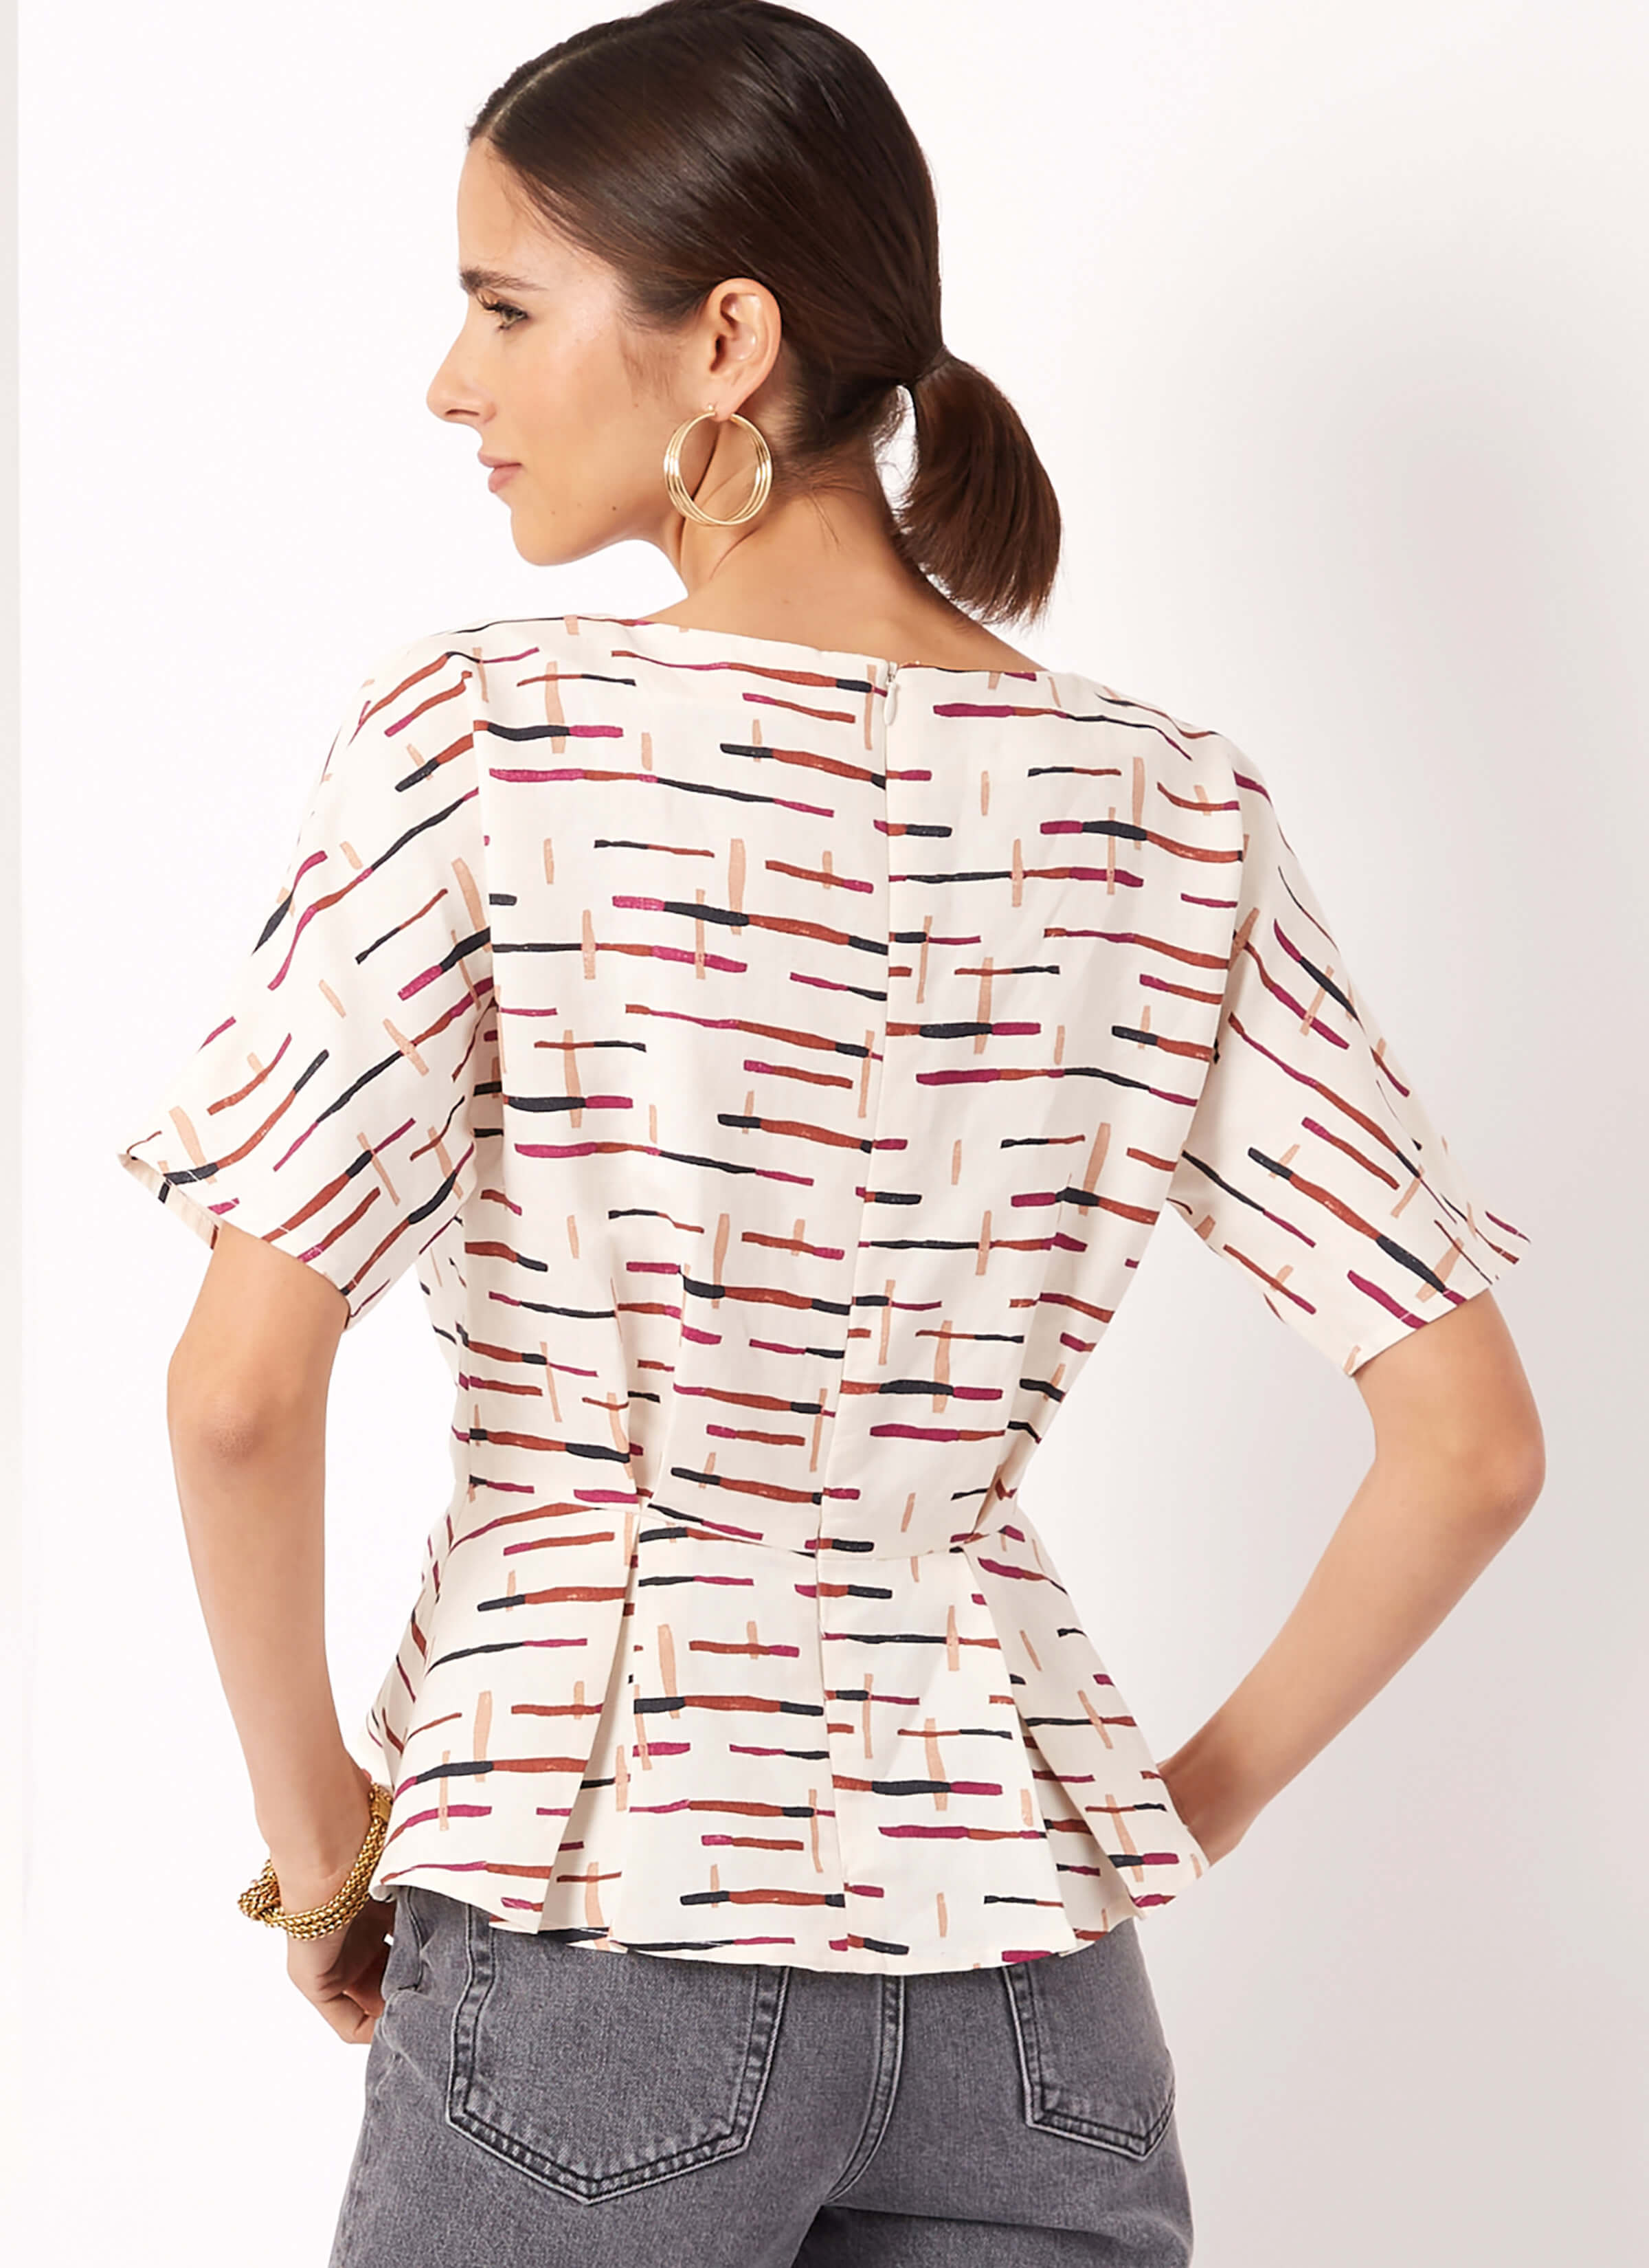 New Look Sewing Pattern N6753 Misses' Top With Sleeve Variations